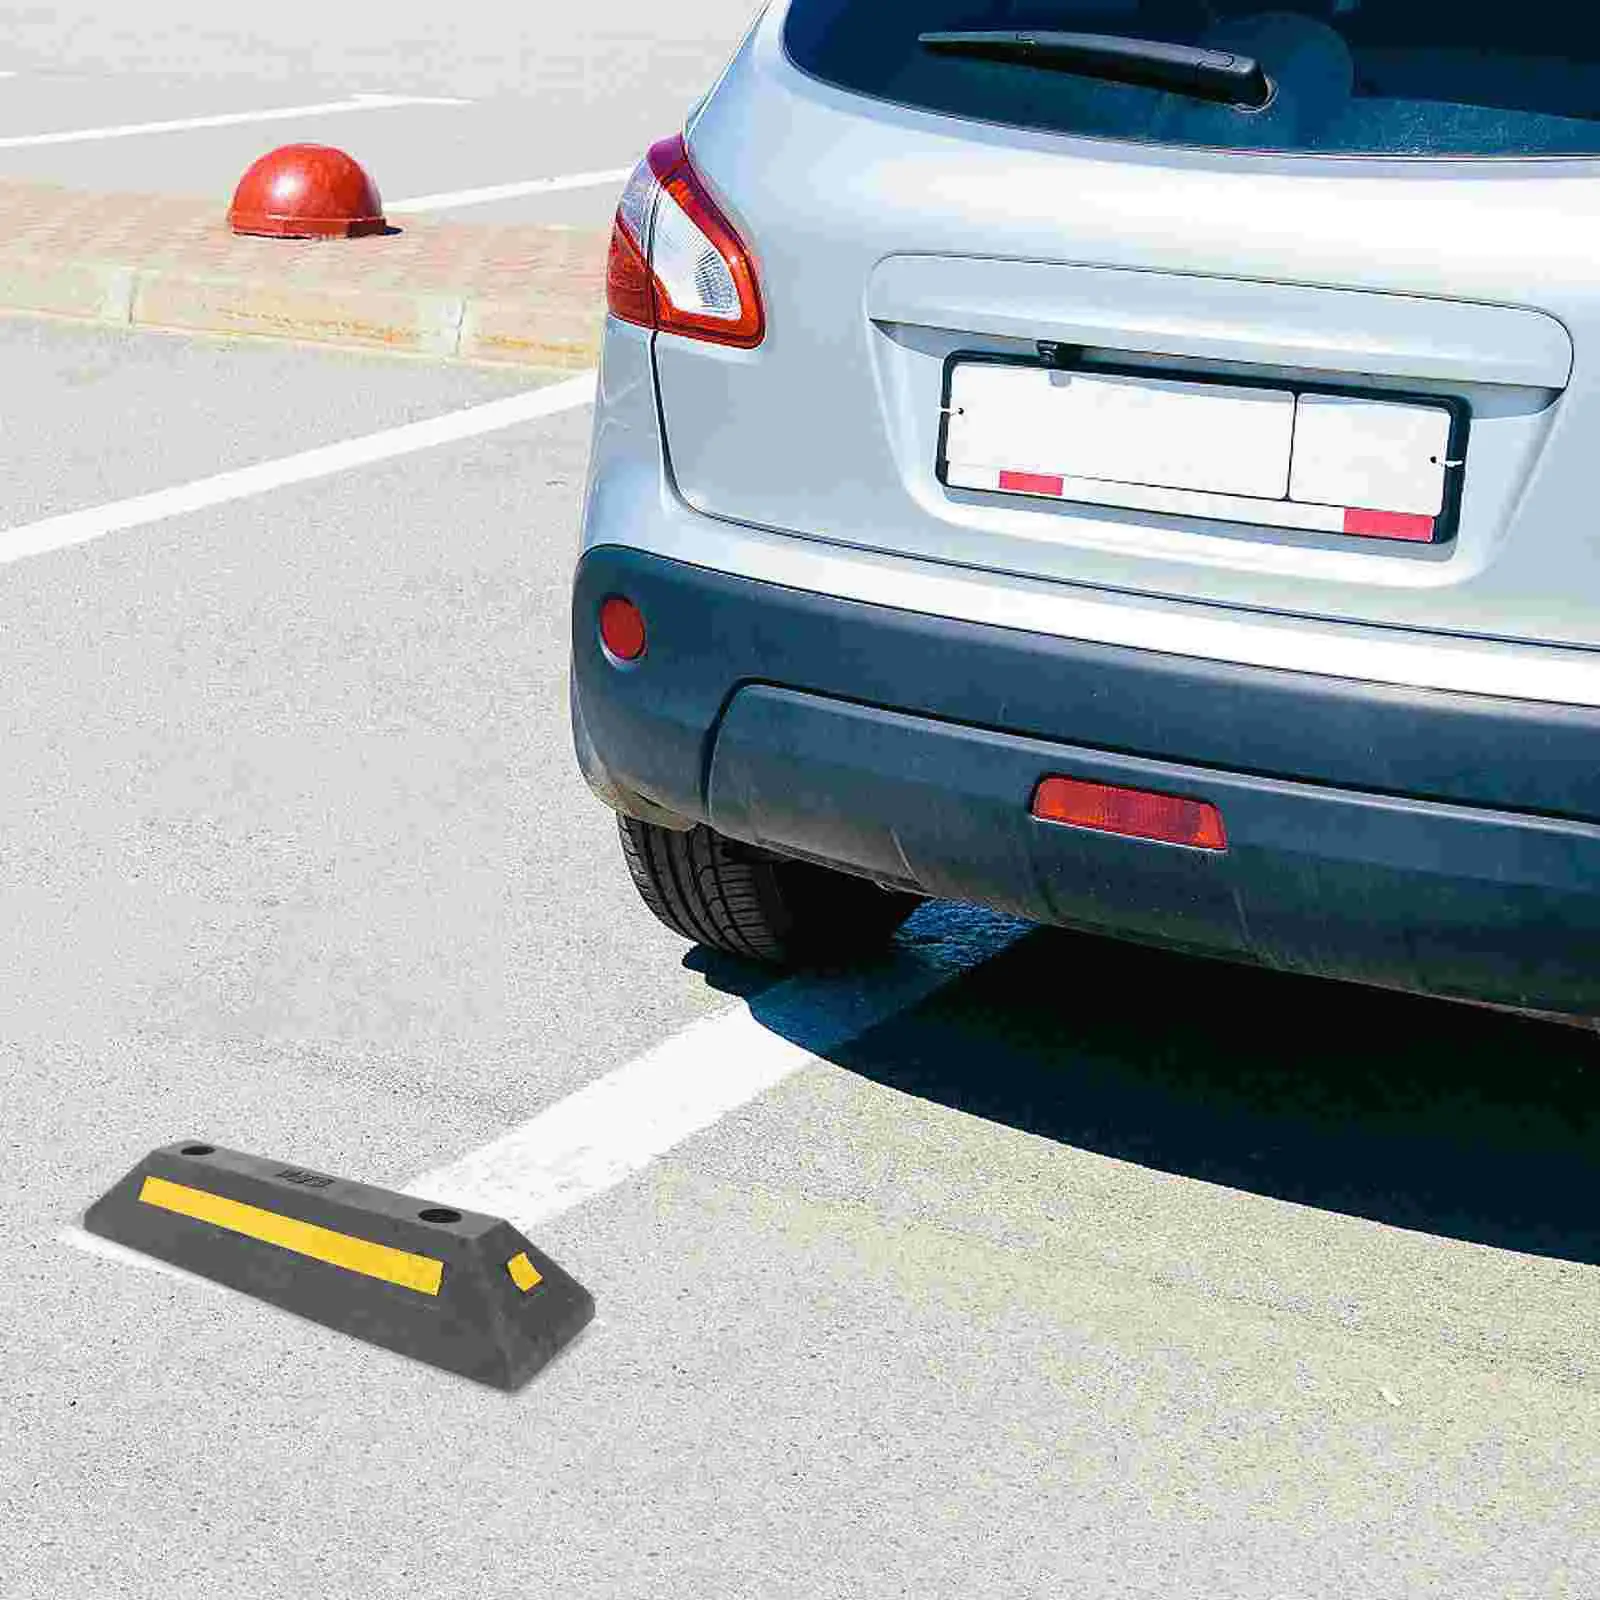 

Stopper Parking Garage Car Wheel Lot Stop Stoppers Rubber Driveway Vehicles Automotive Stops Block Truck Accessories Gadgets